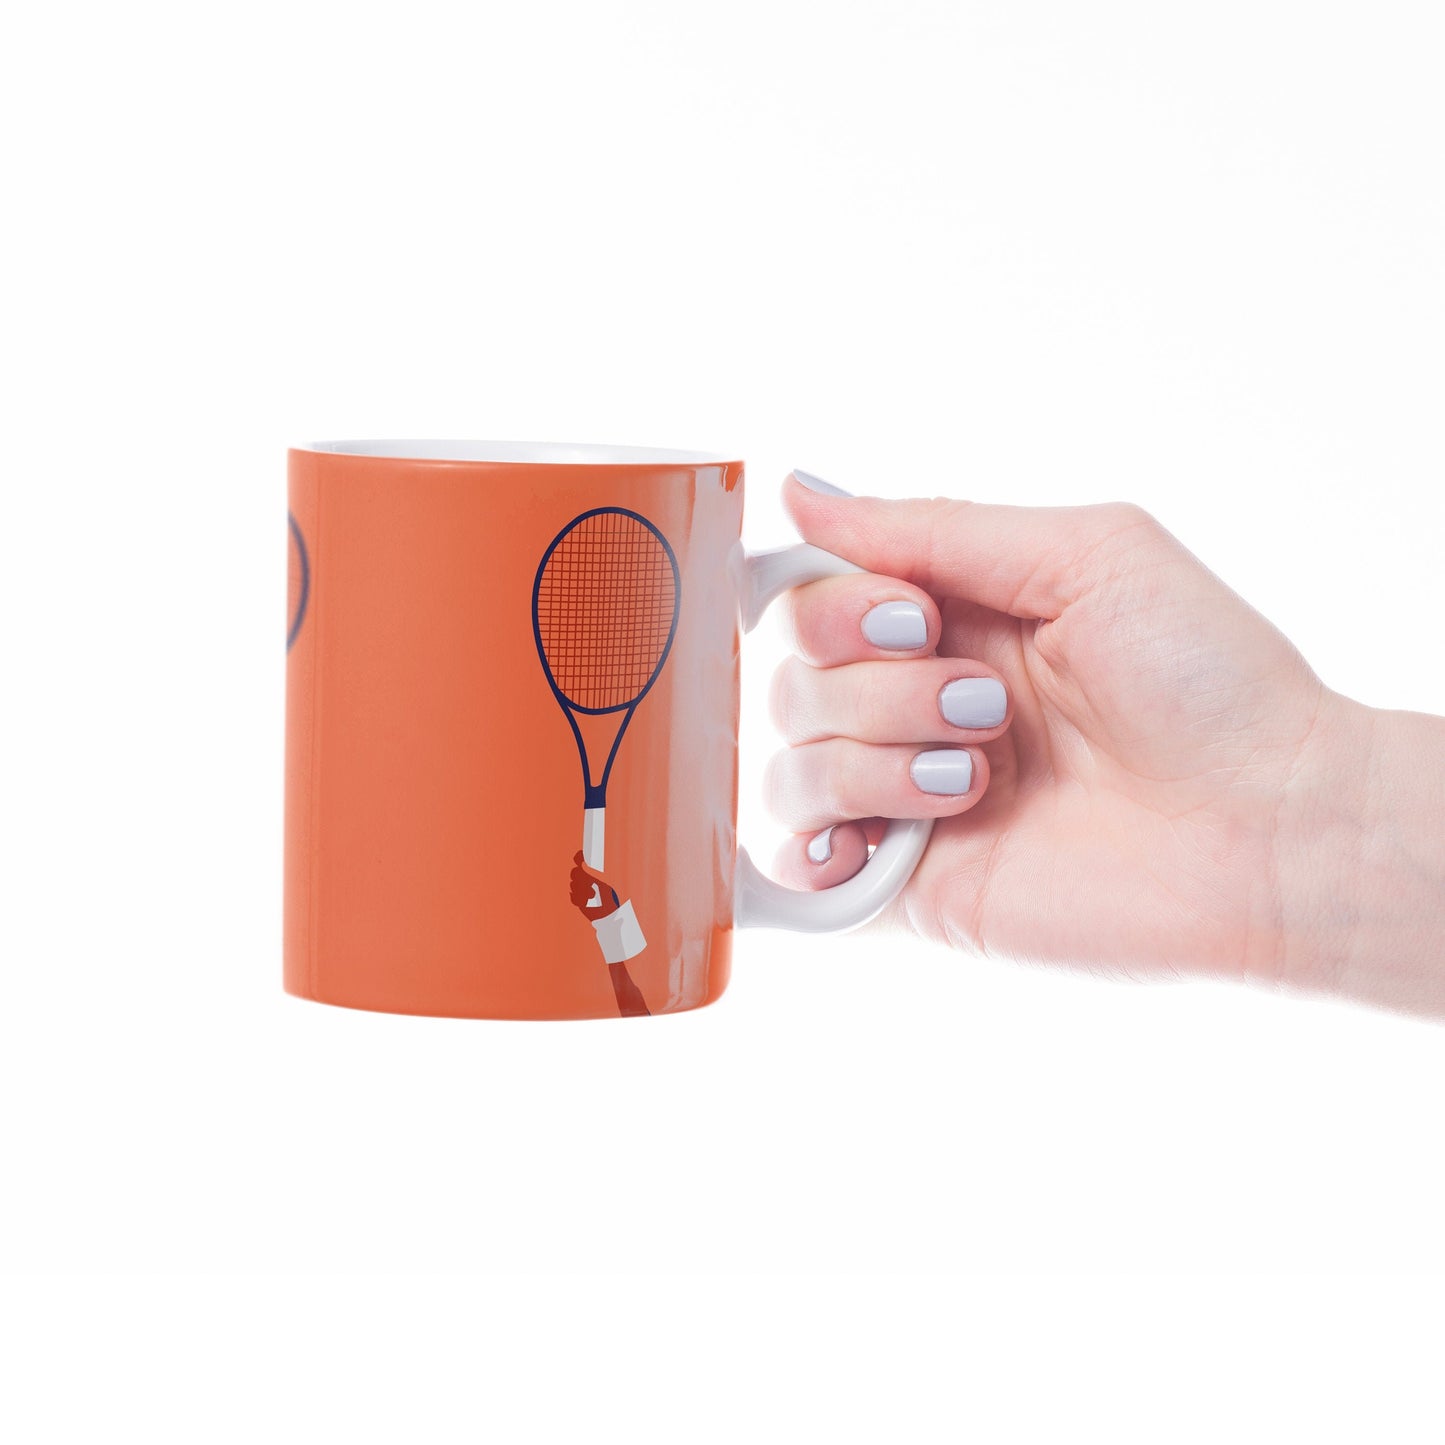 Cup or mug "Tennis racket" - Customizable